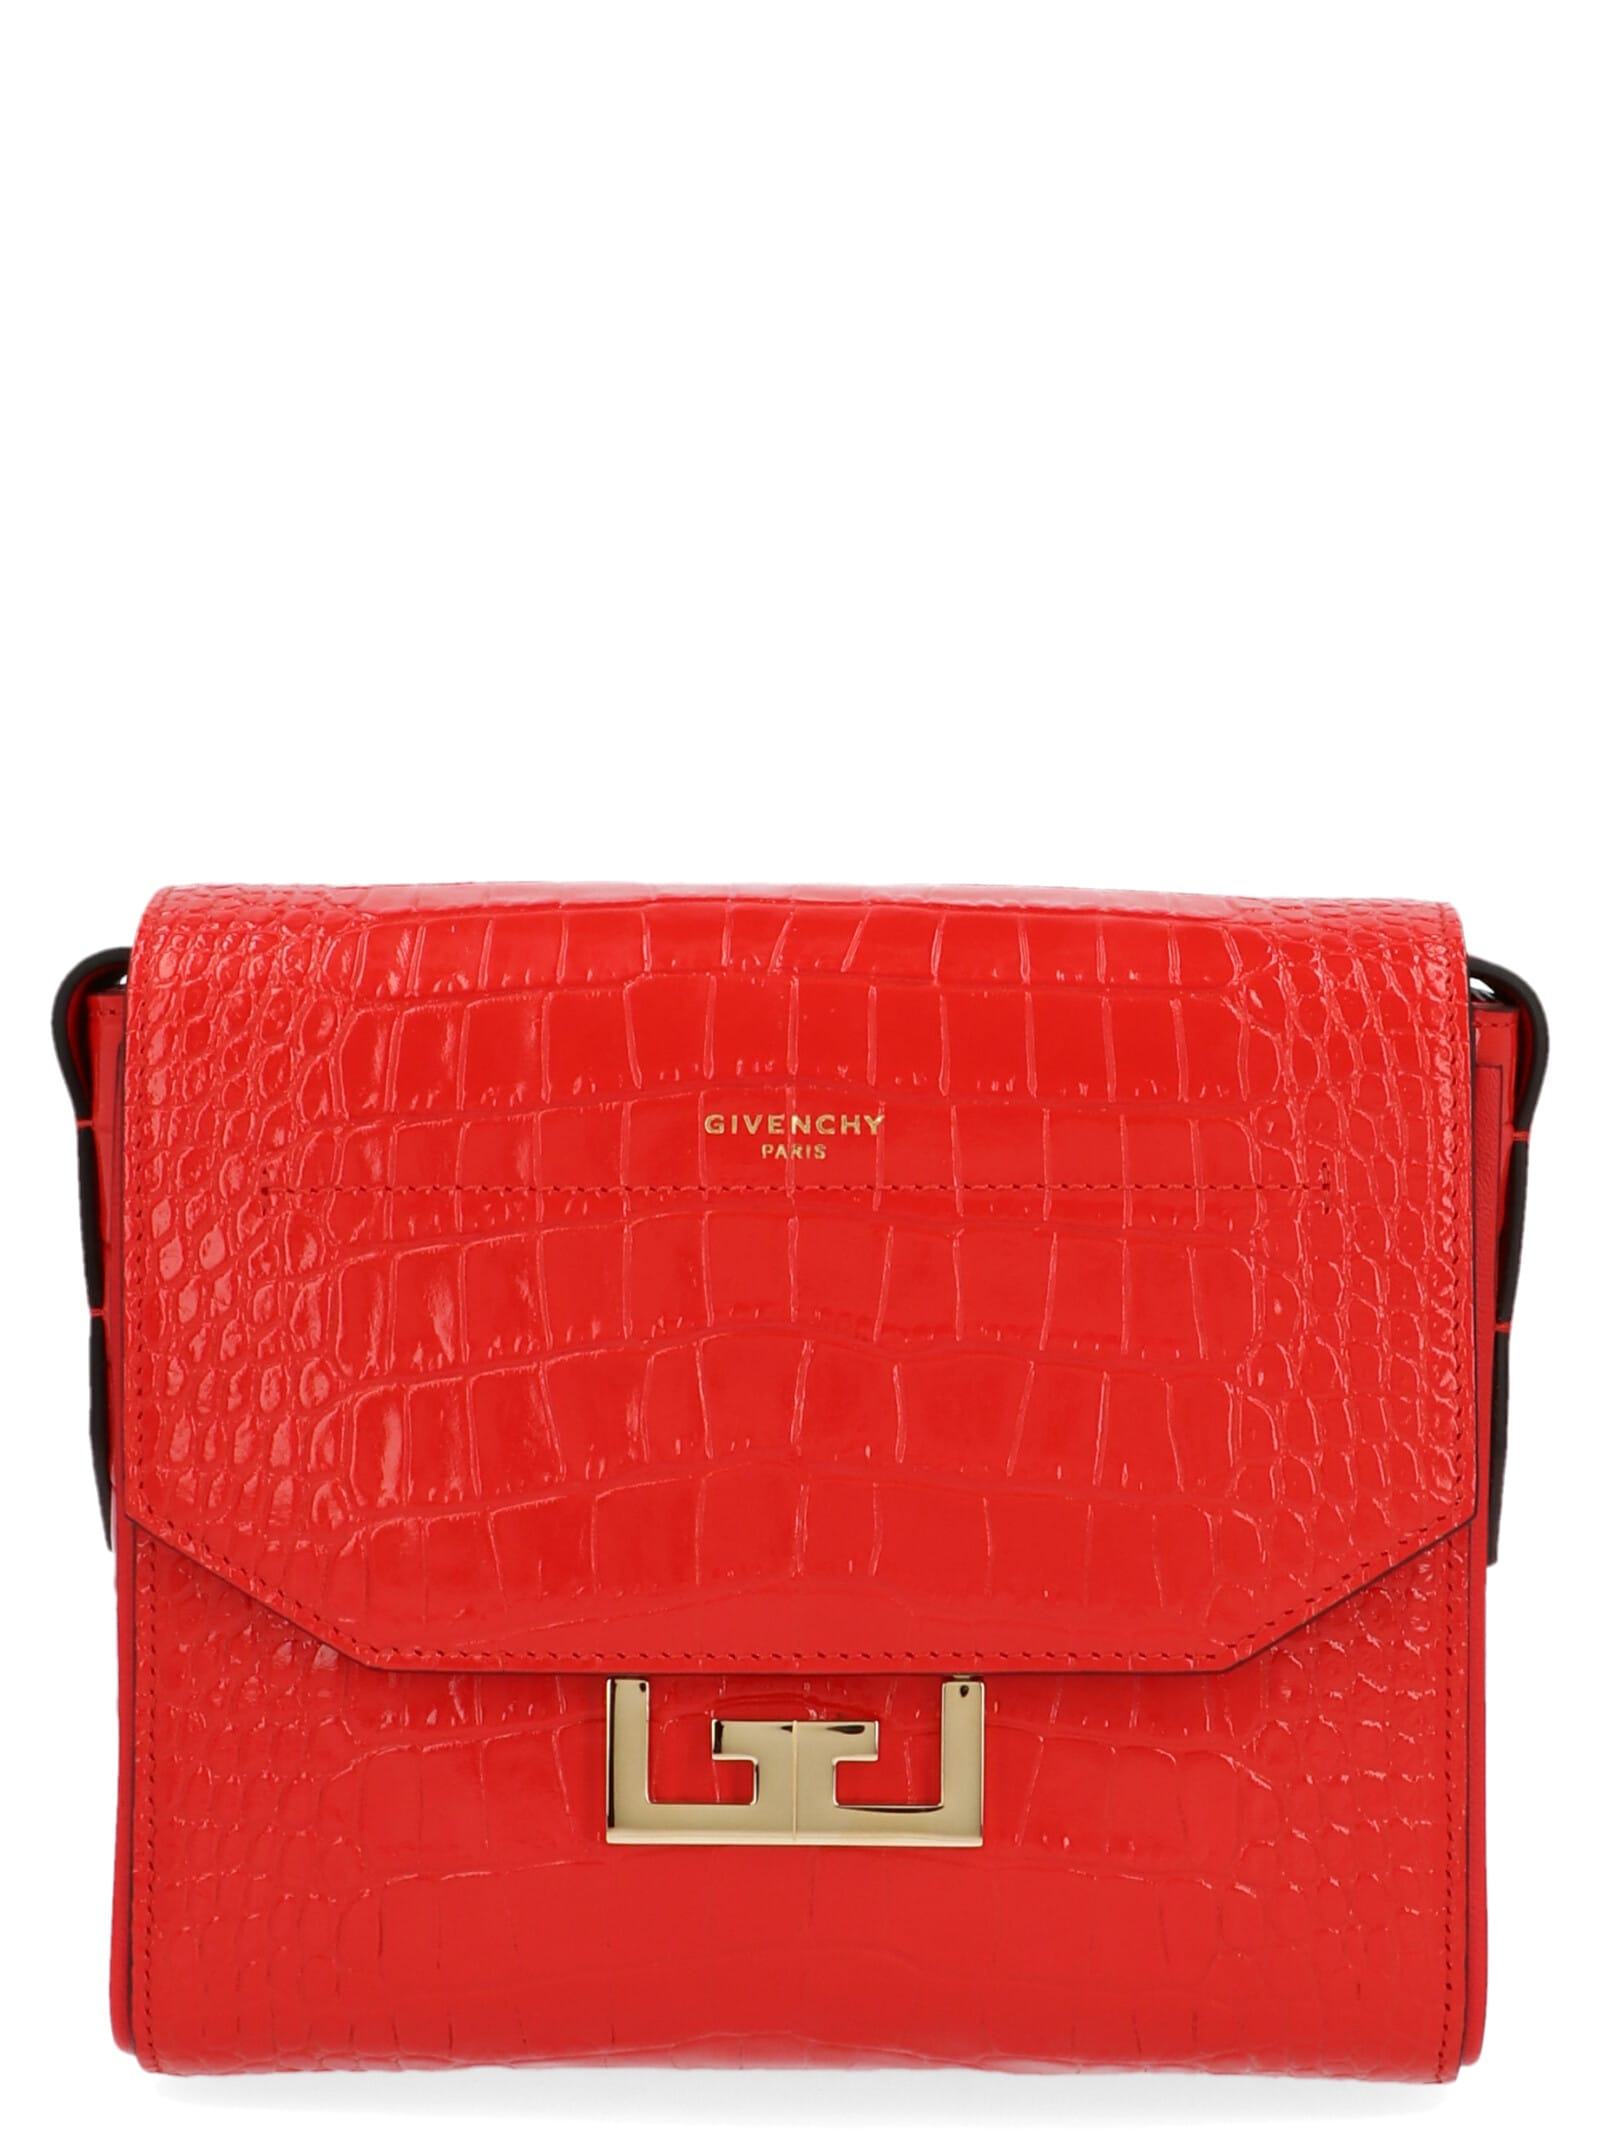 Givenchy Eden Bag In Red